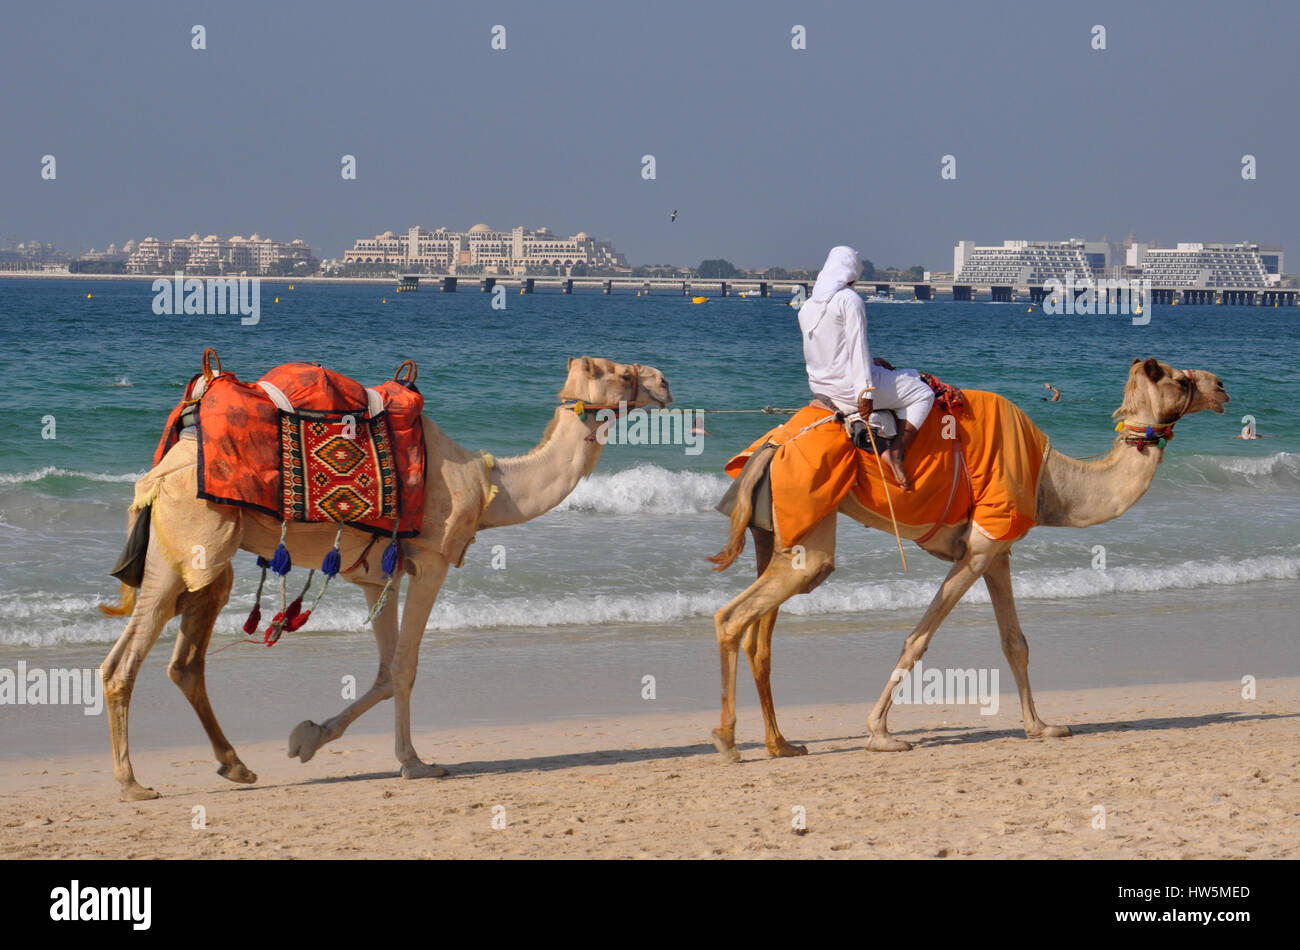 Camel riding on Marina beach in Dubai - great travel destination Stock Photo